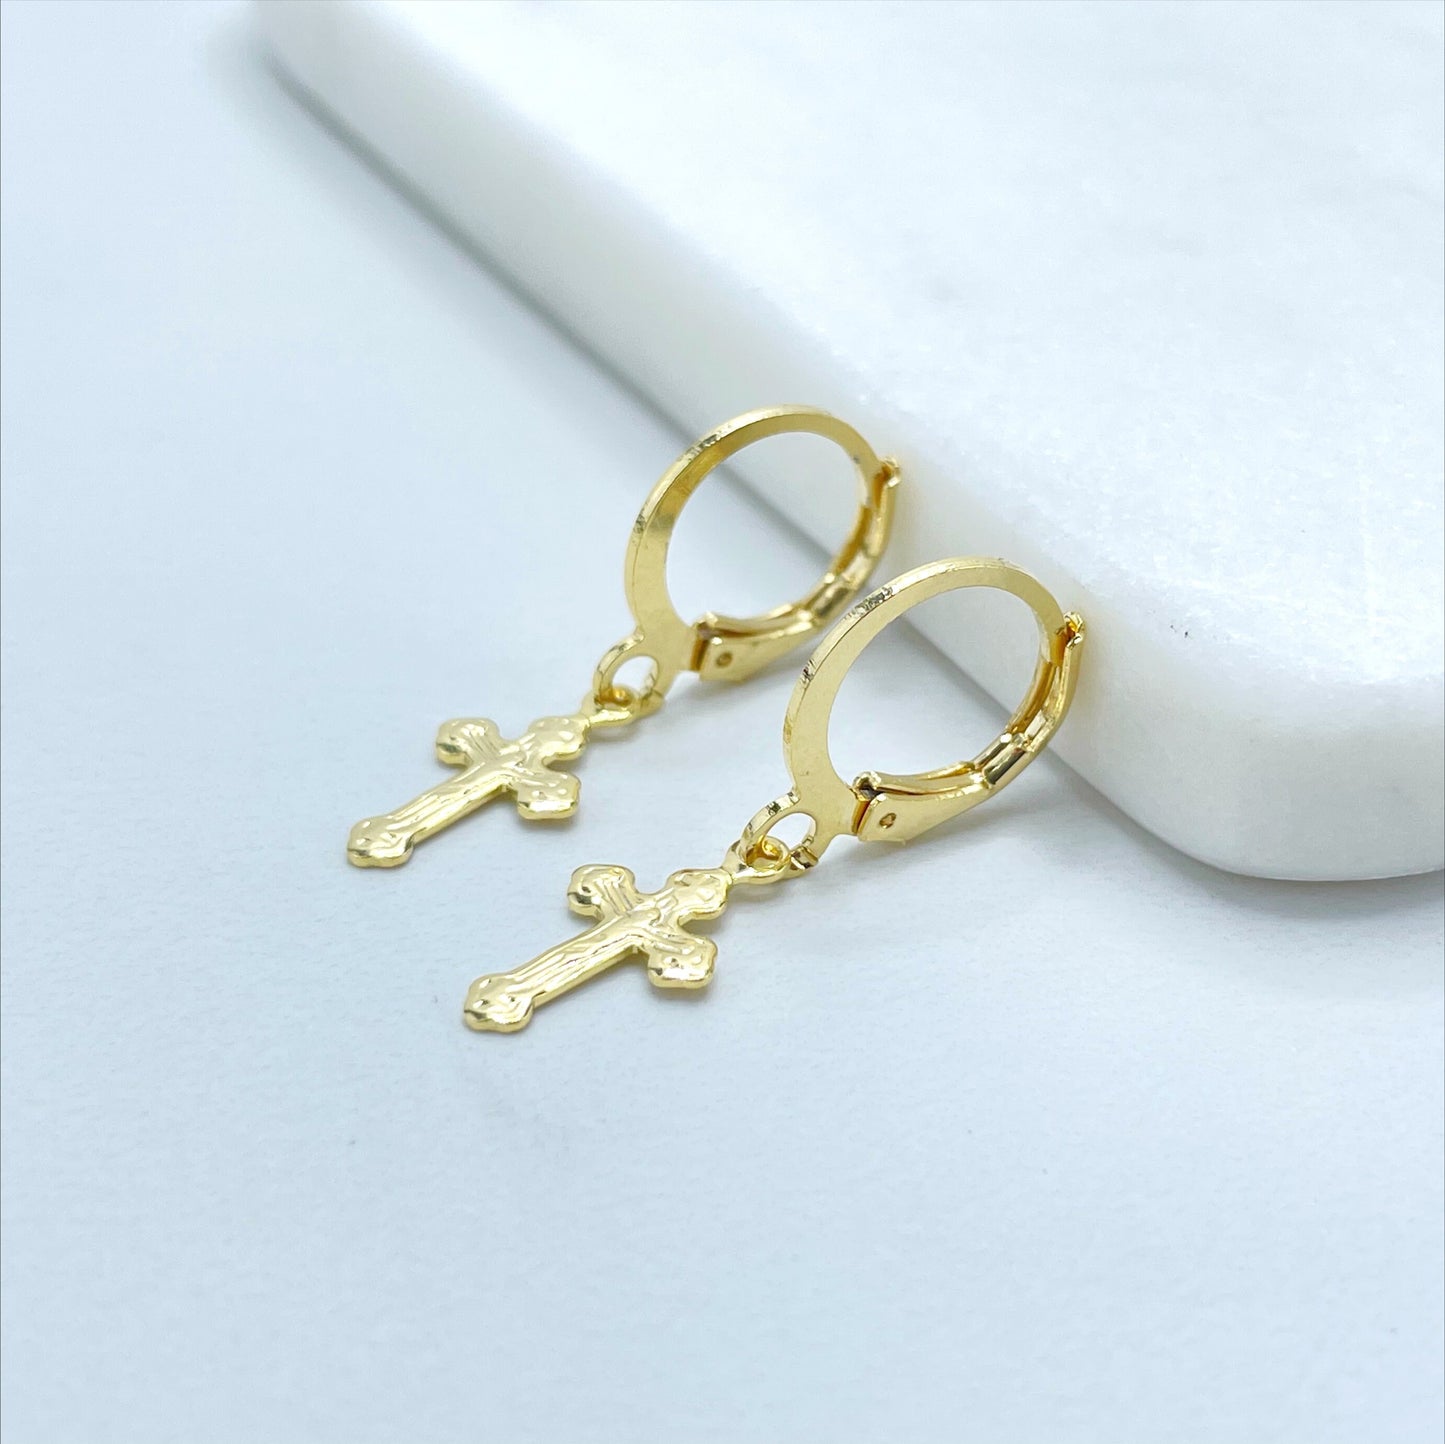 18k Gold Filled 12mm Huggie Earrings with Jesus Christ Crucifix Cross Shape Charm, Dangle Earrings, Wholesale Jewelry Making Supplies